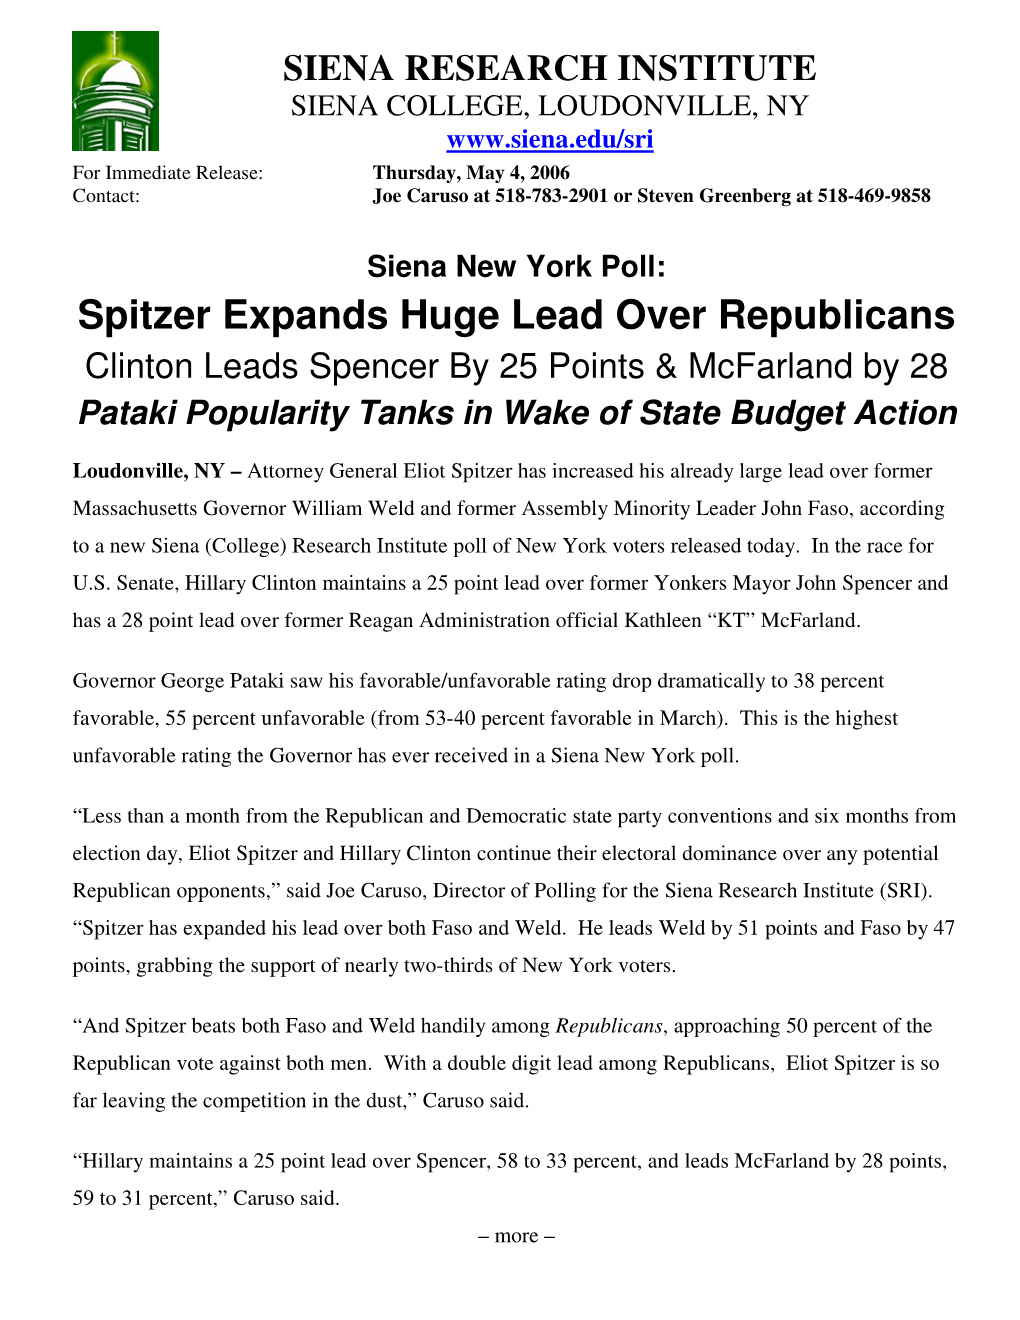 Spitzer Expands Huge Lead Over Republicans